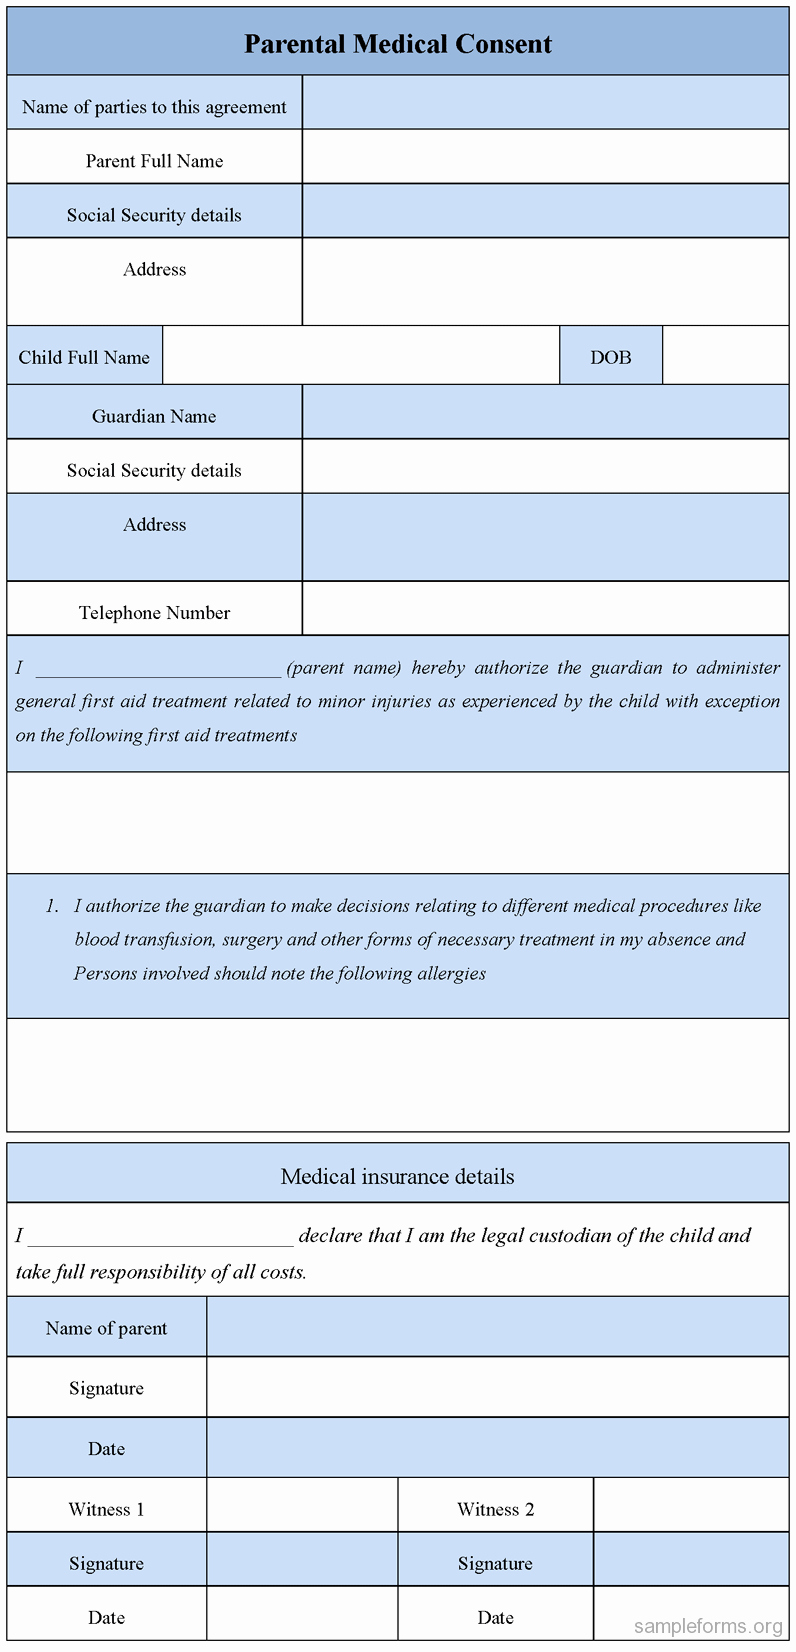 Medical Consent form for Caregiver Luxury Parental Medical Consent form Sample forms